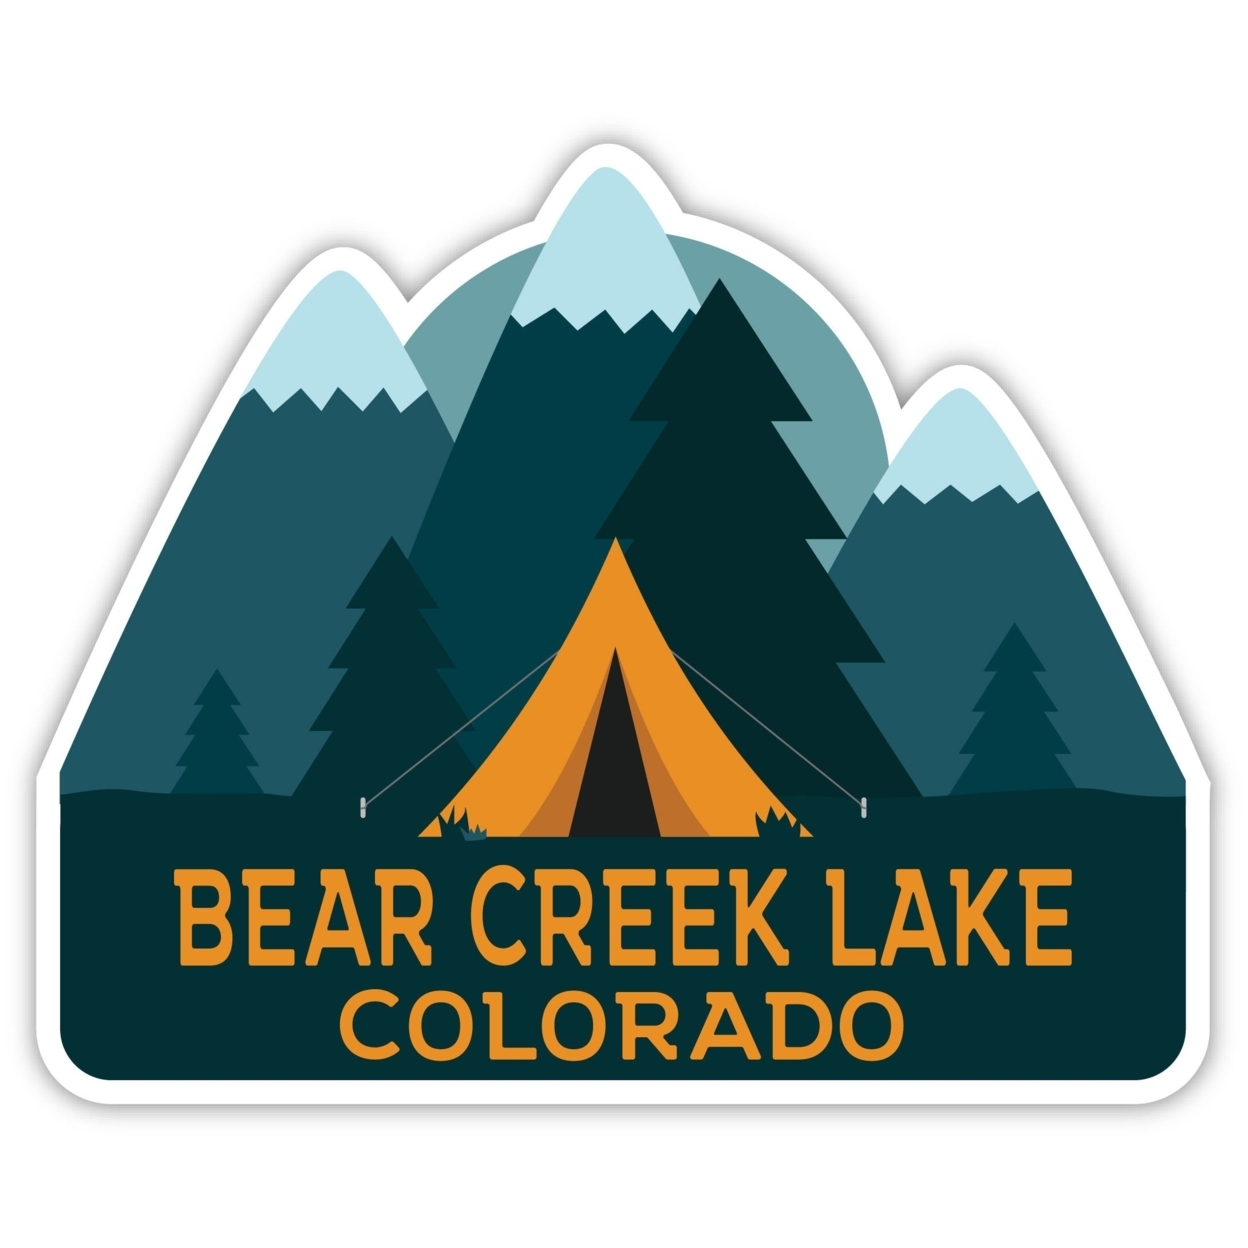 Bear Creek Lake Colorado Souvenir Decorative Stickers (Choose Theme And Size) - 4-Pack, 4-Inch, Tent